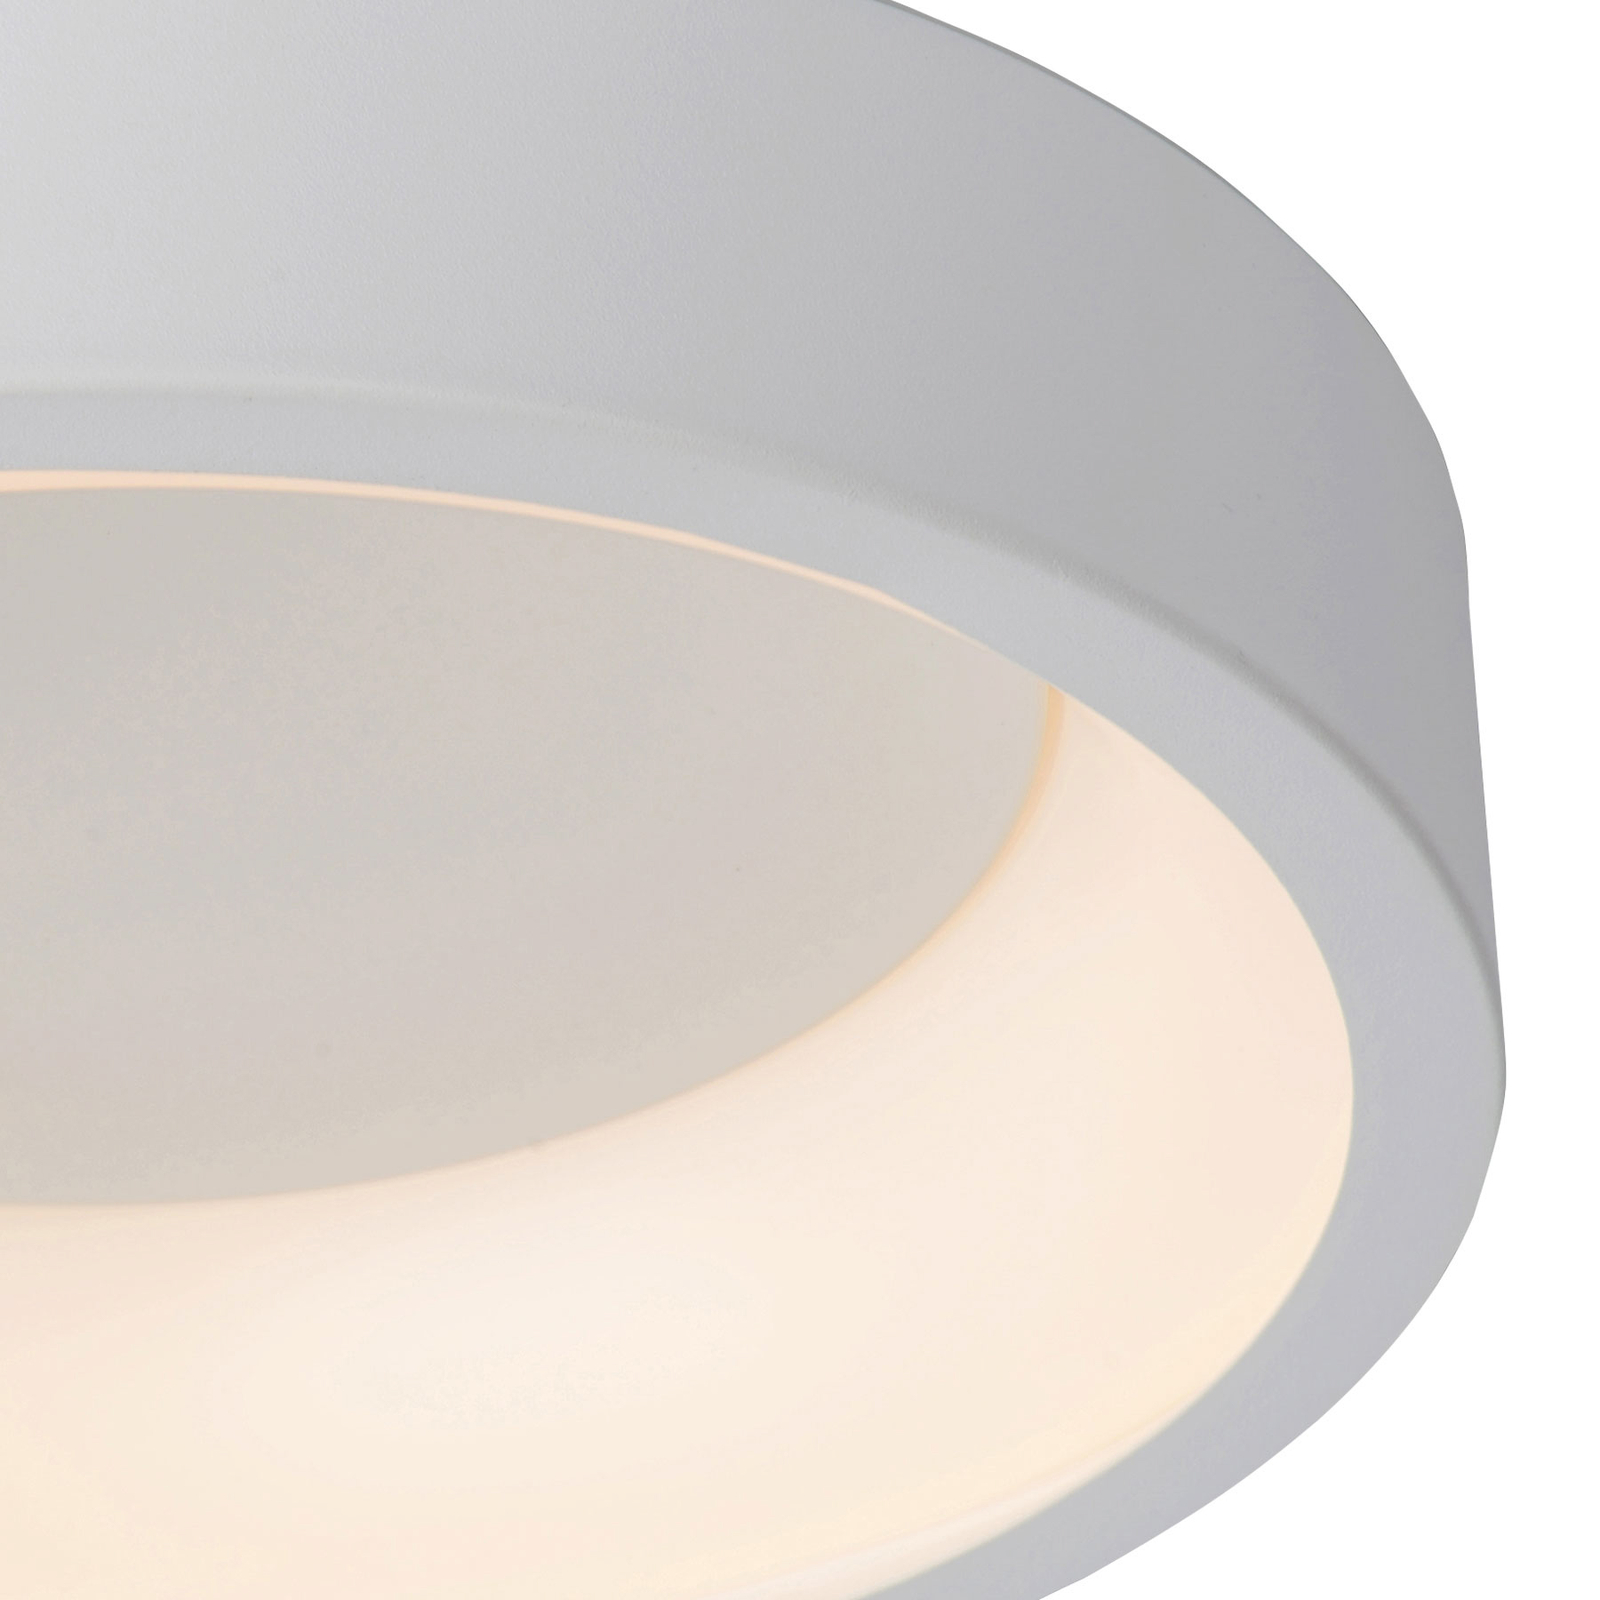 Talowe LED ceiling light, white, Ø 45 cm